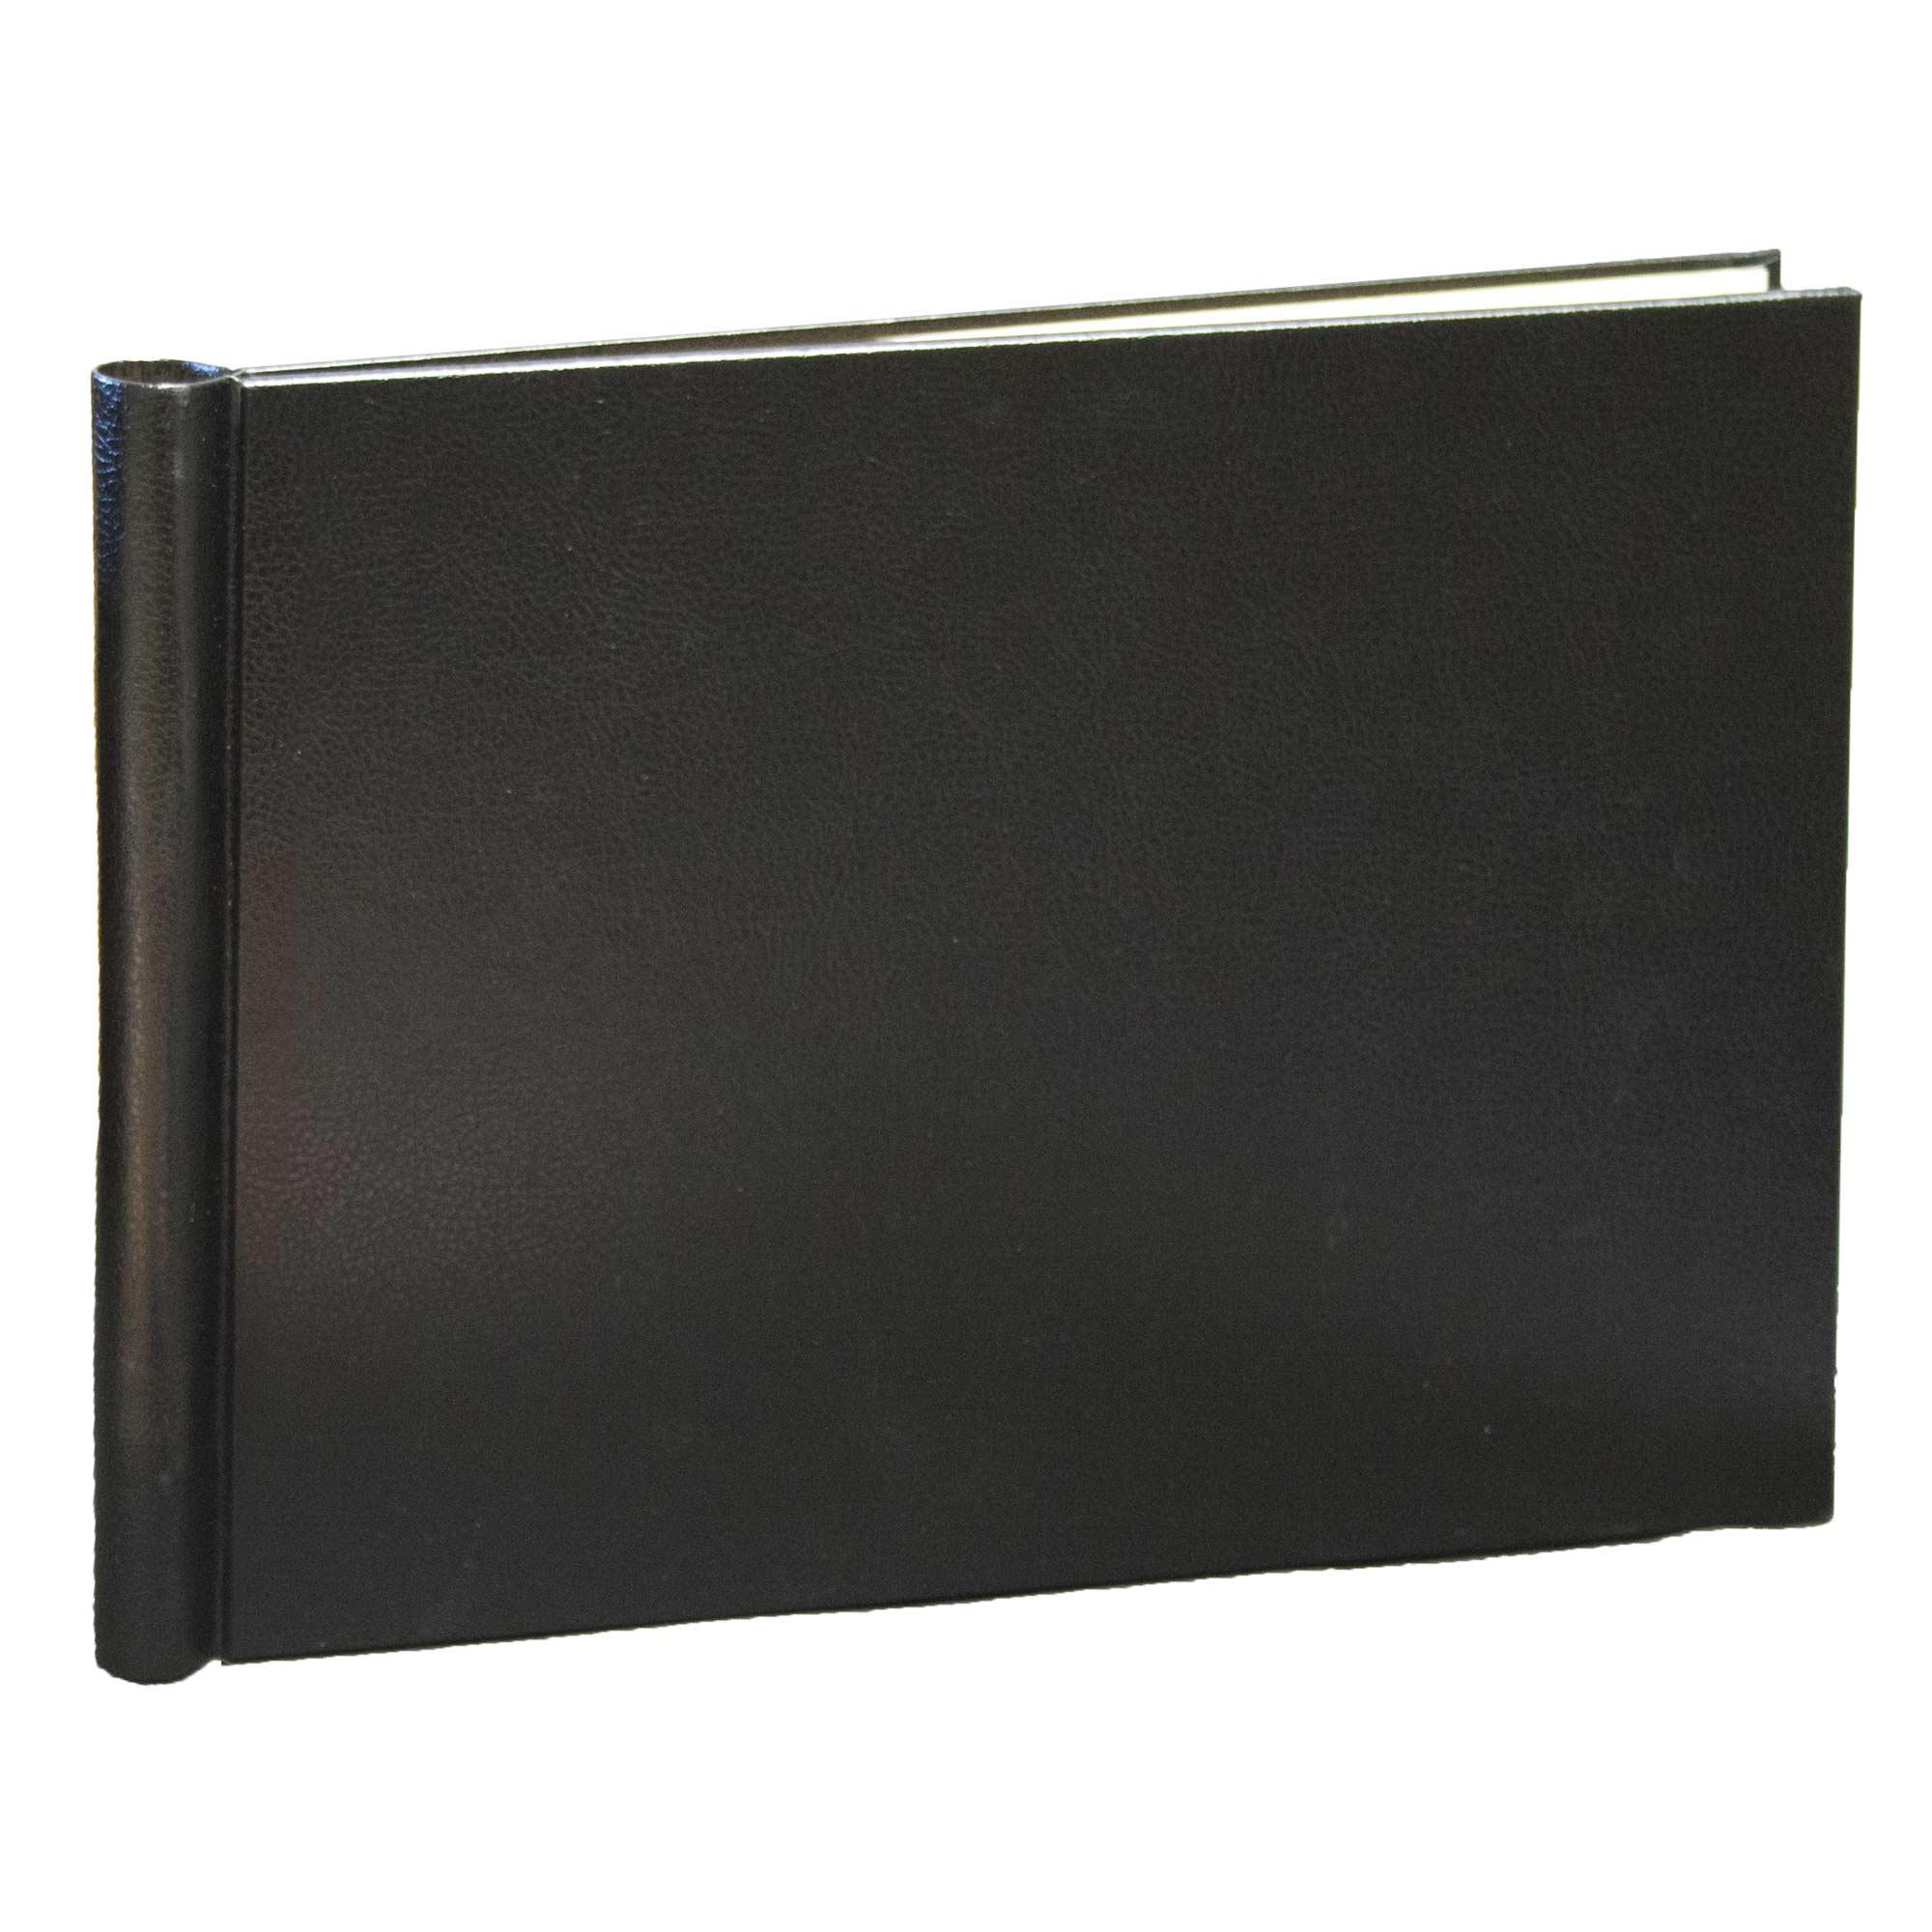 A3 Landscape Brampton Leather look Springback Folder - Black